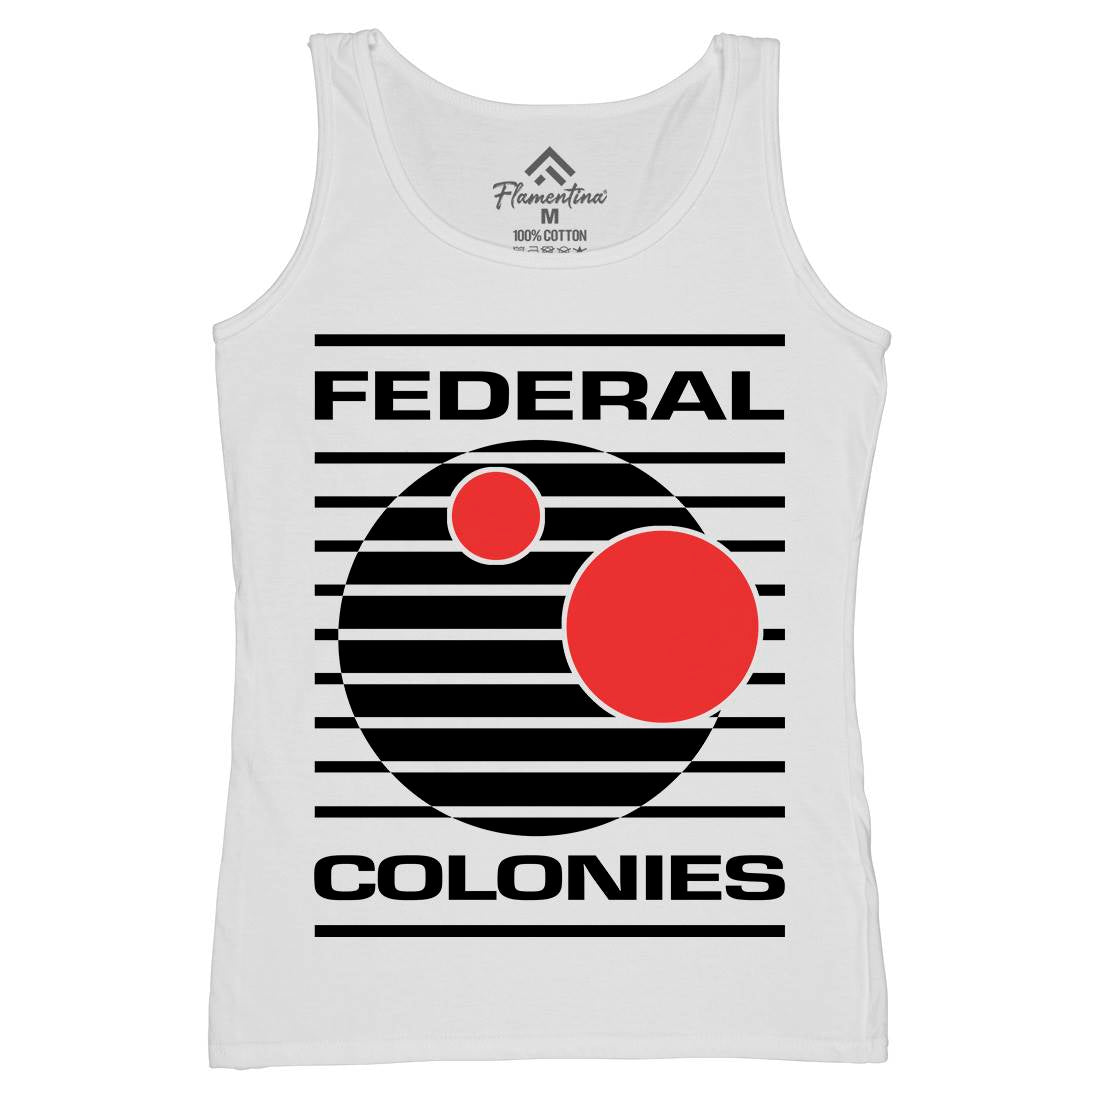 Federal Colonies Womens Organic Tank Top Vest Space D409